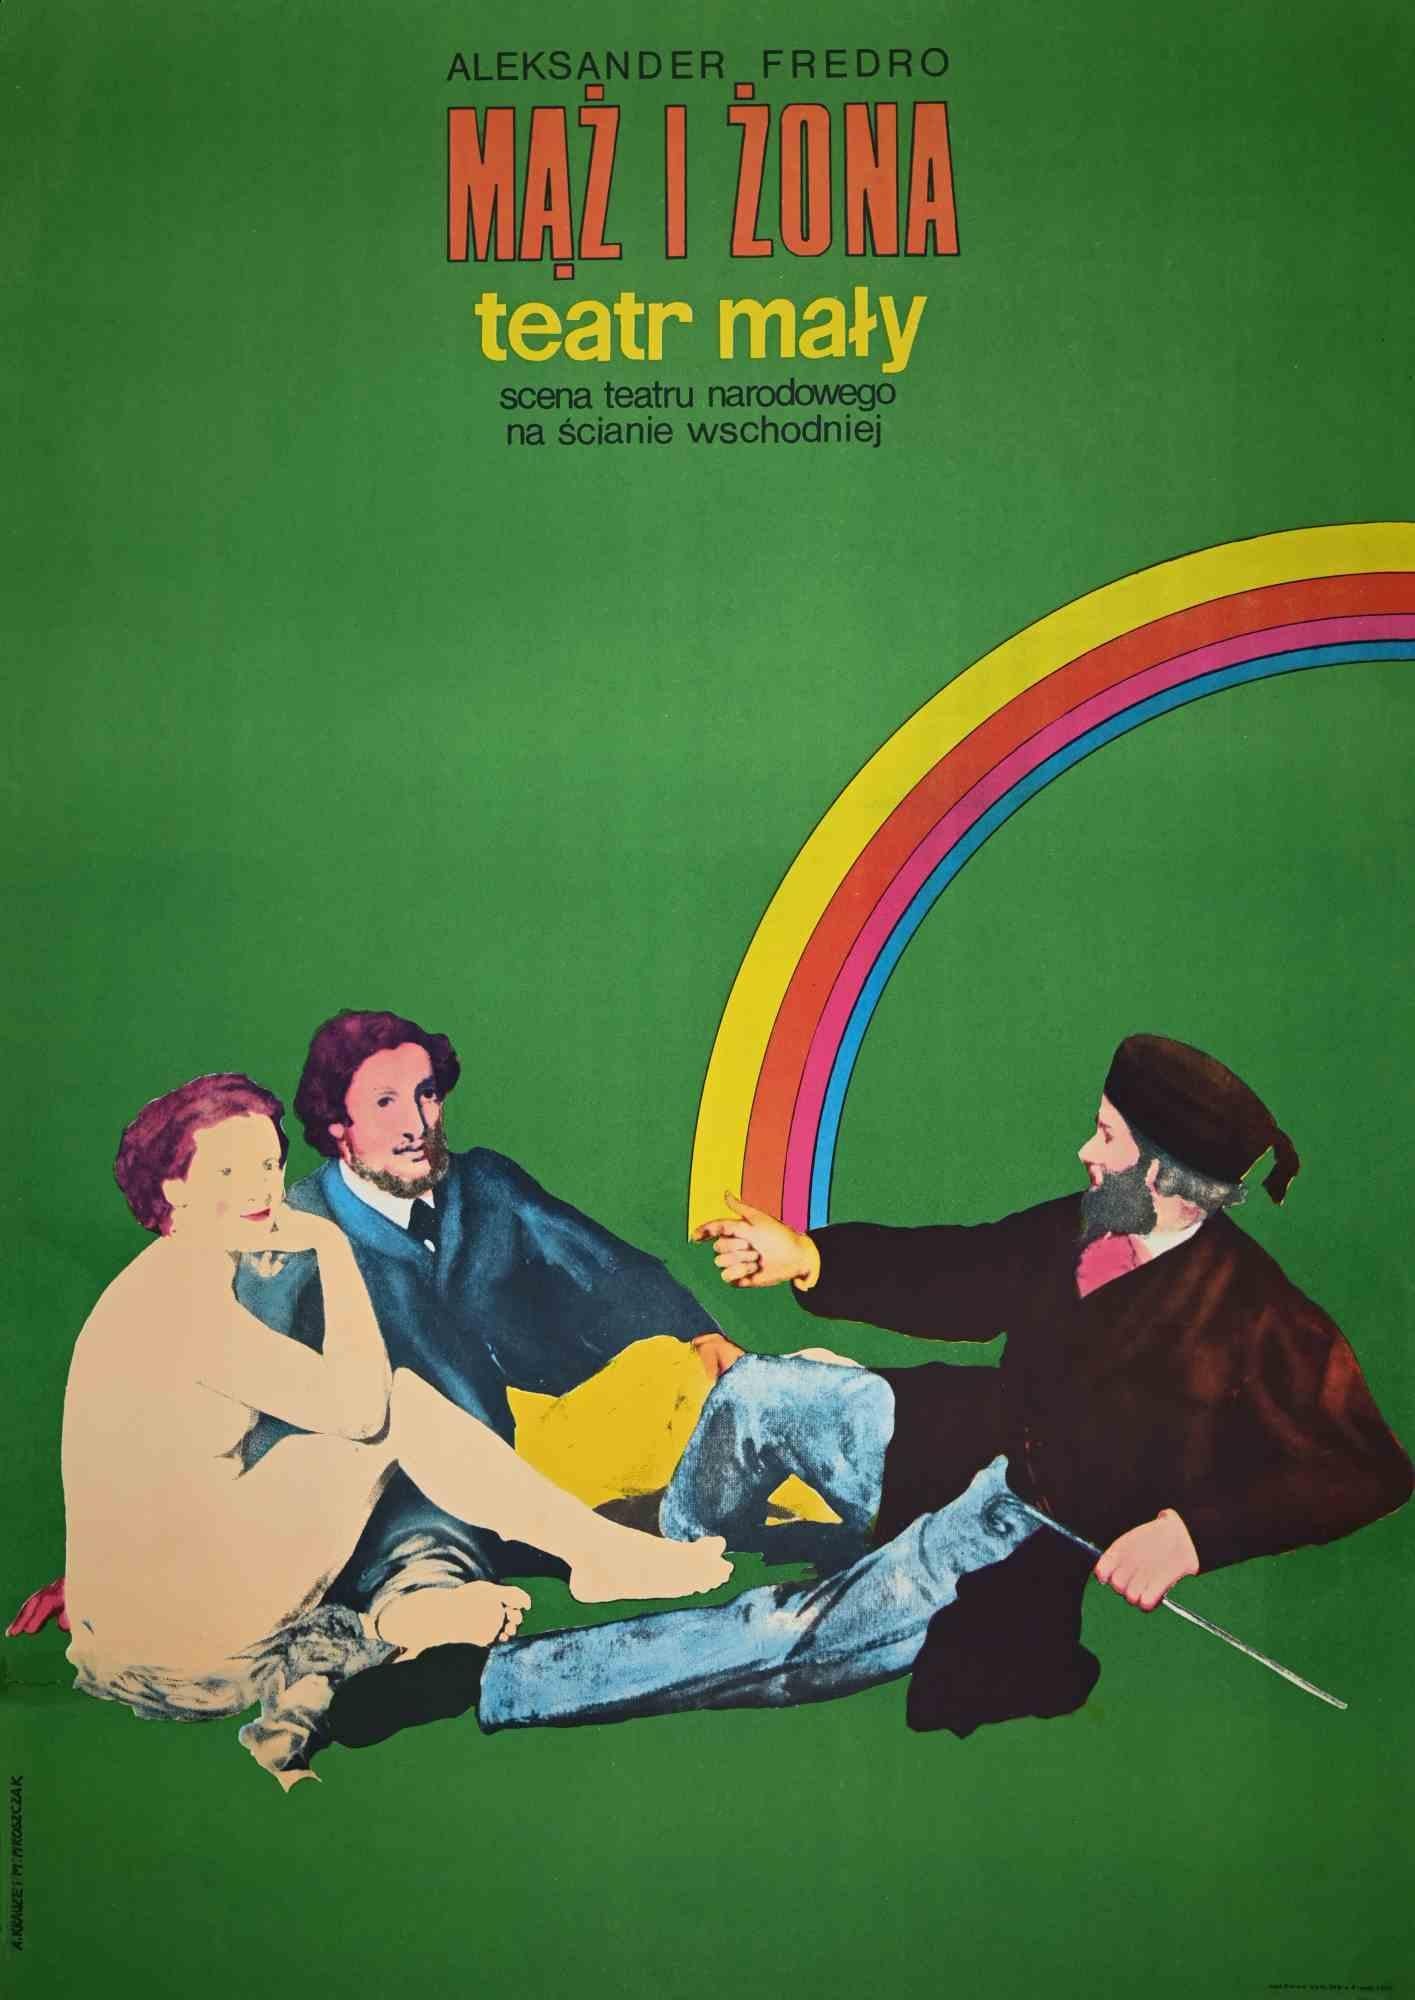 Marcin Mroszczak Figurative Print - Maz i Zona Teatr Maty - Vintage Poster by M. Mroszczak - 1970